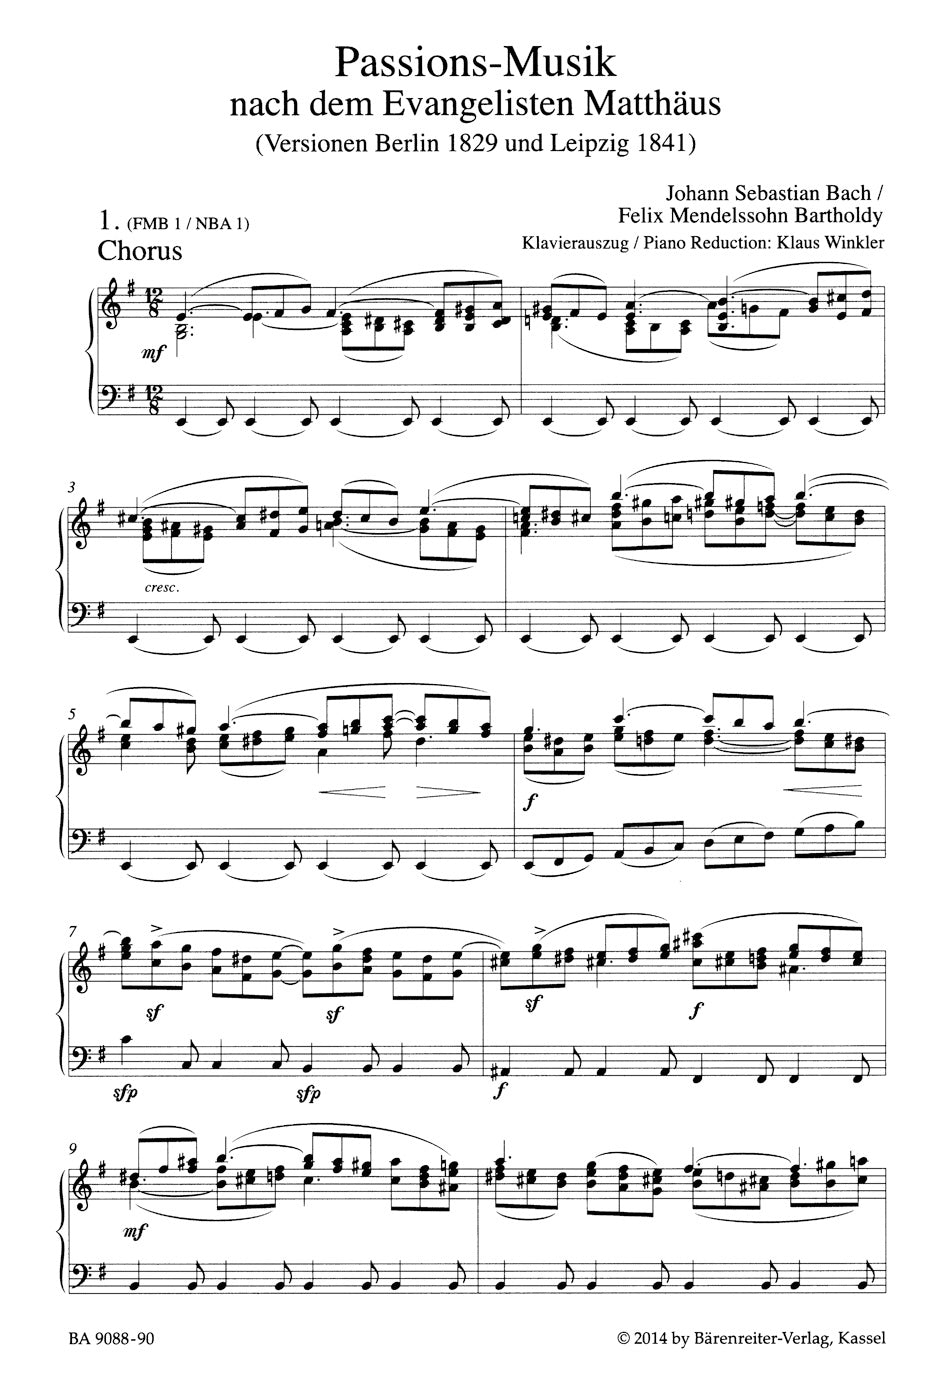 Bach-Mendelssohn: St Matthew Passion, BWV 244